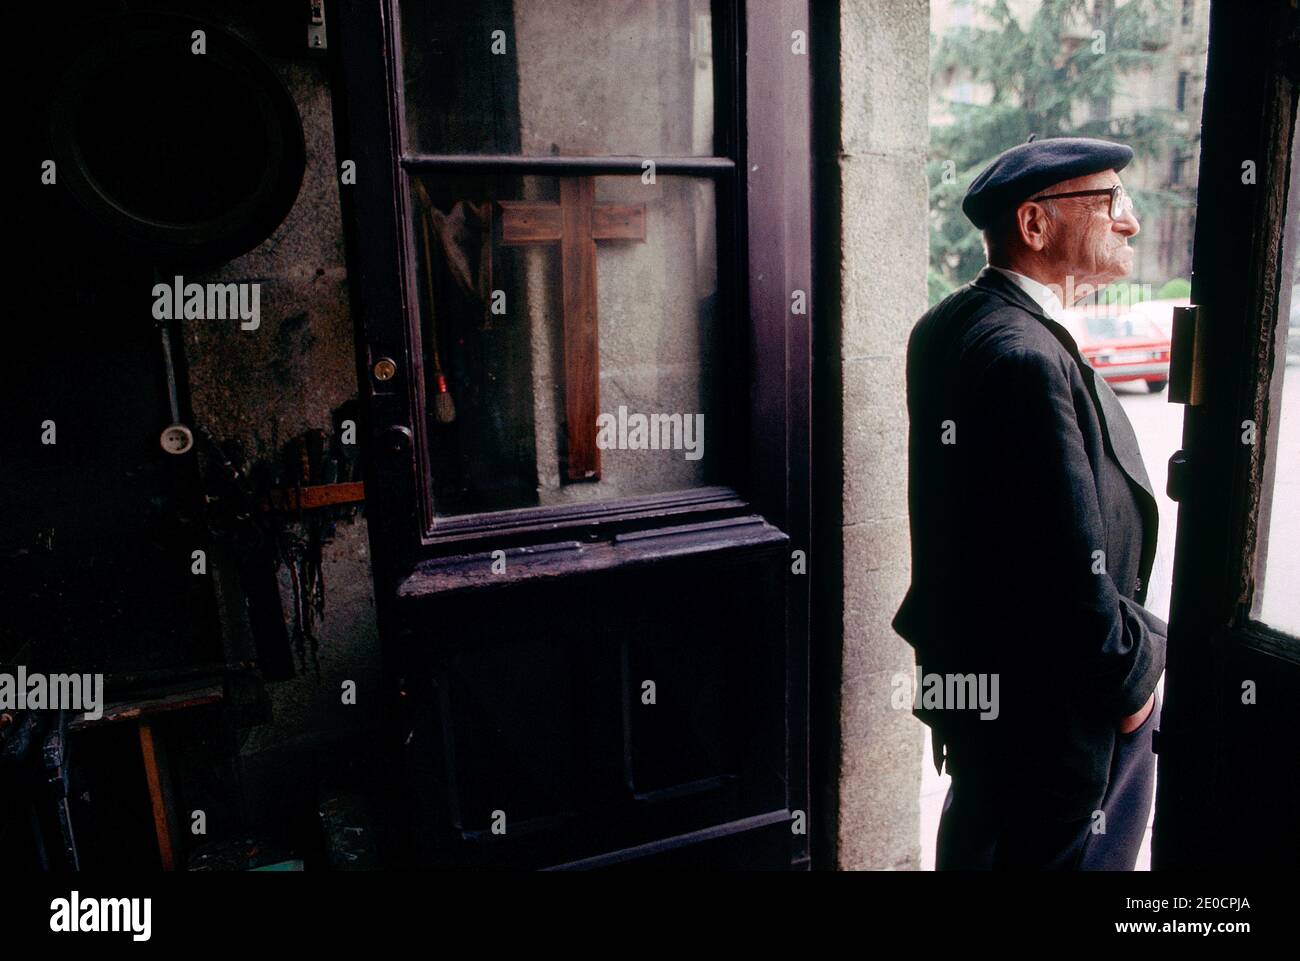 Spain/Santiago de Compostela/ Old man is waiting in front of his shop Stock Photo